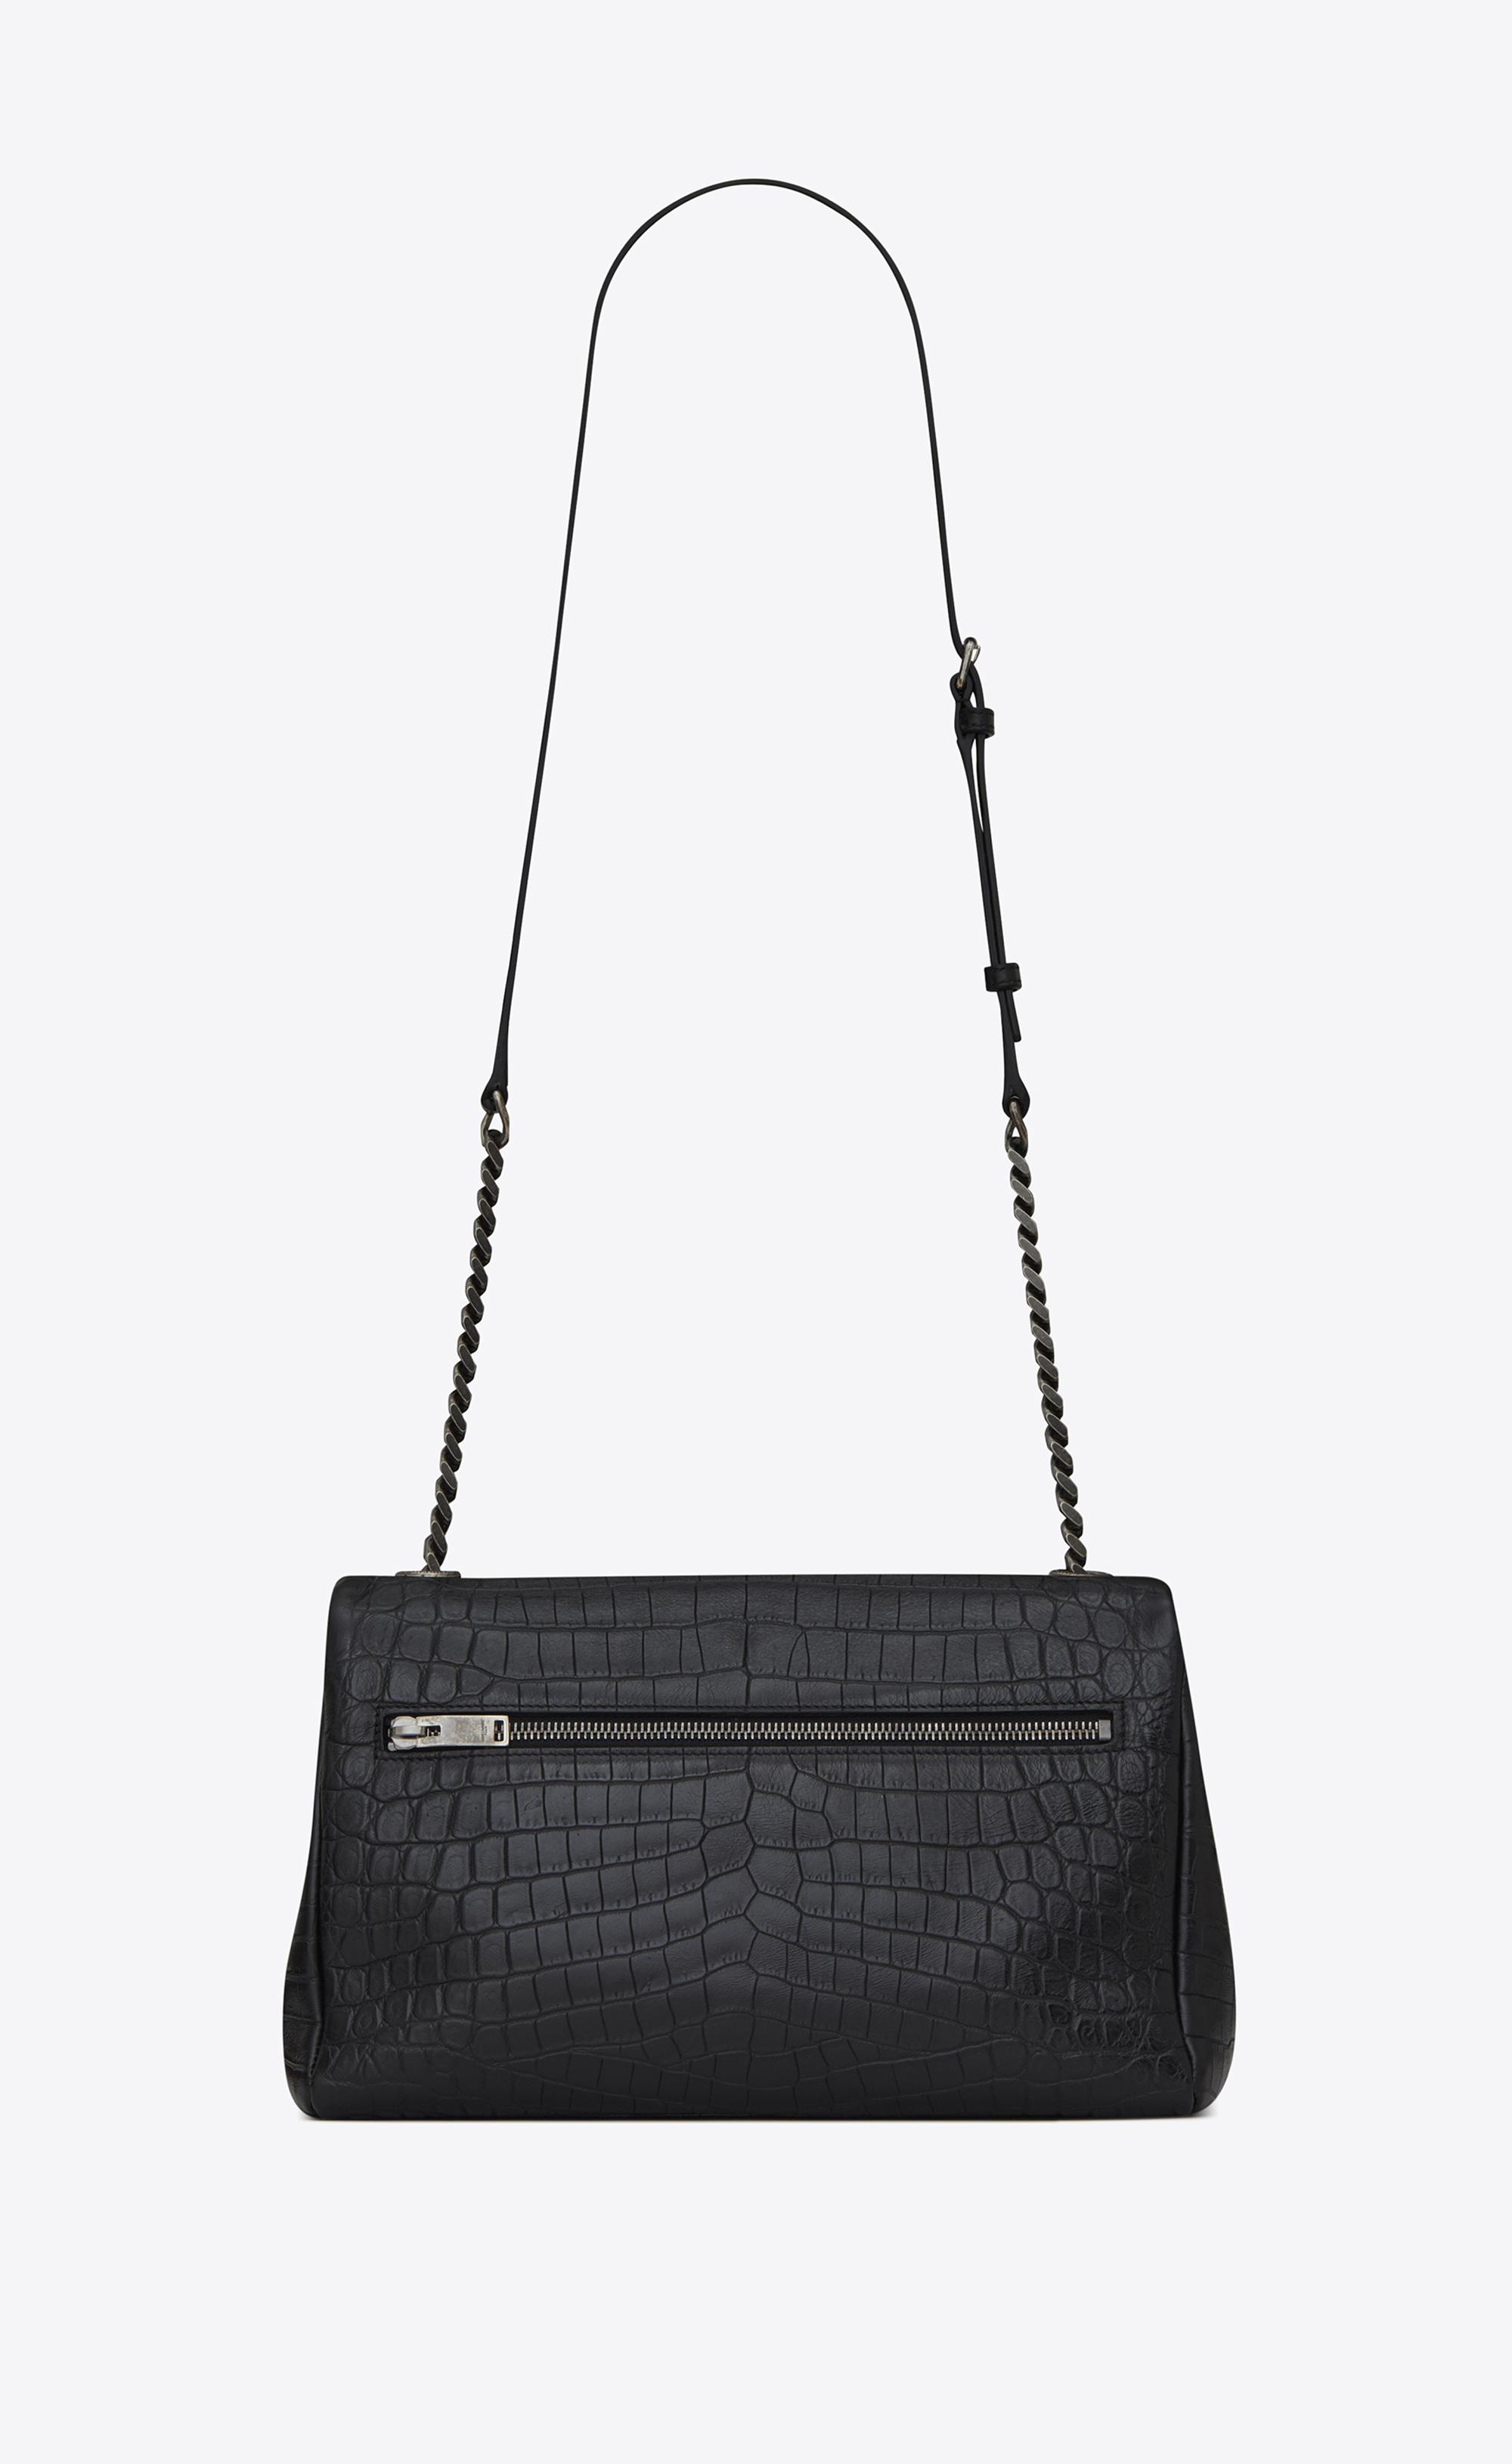 Goldmas crocodile belly leather matte black handbag